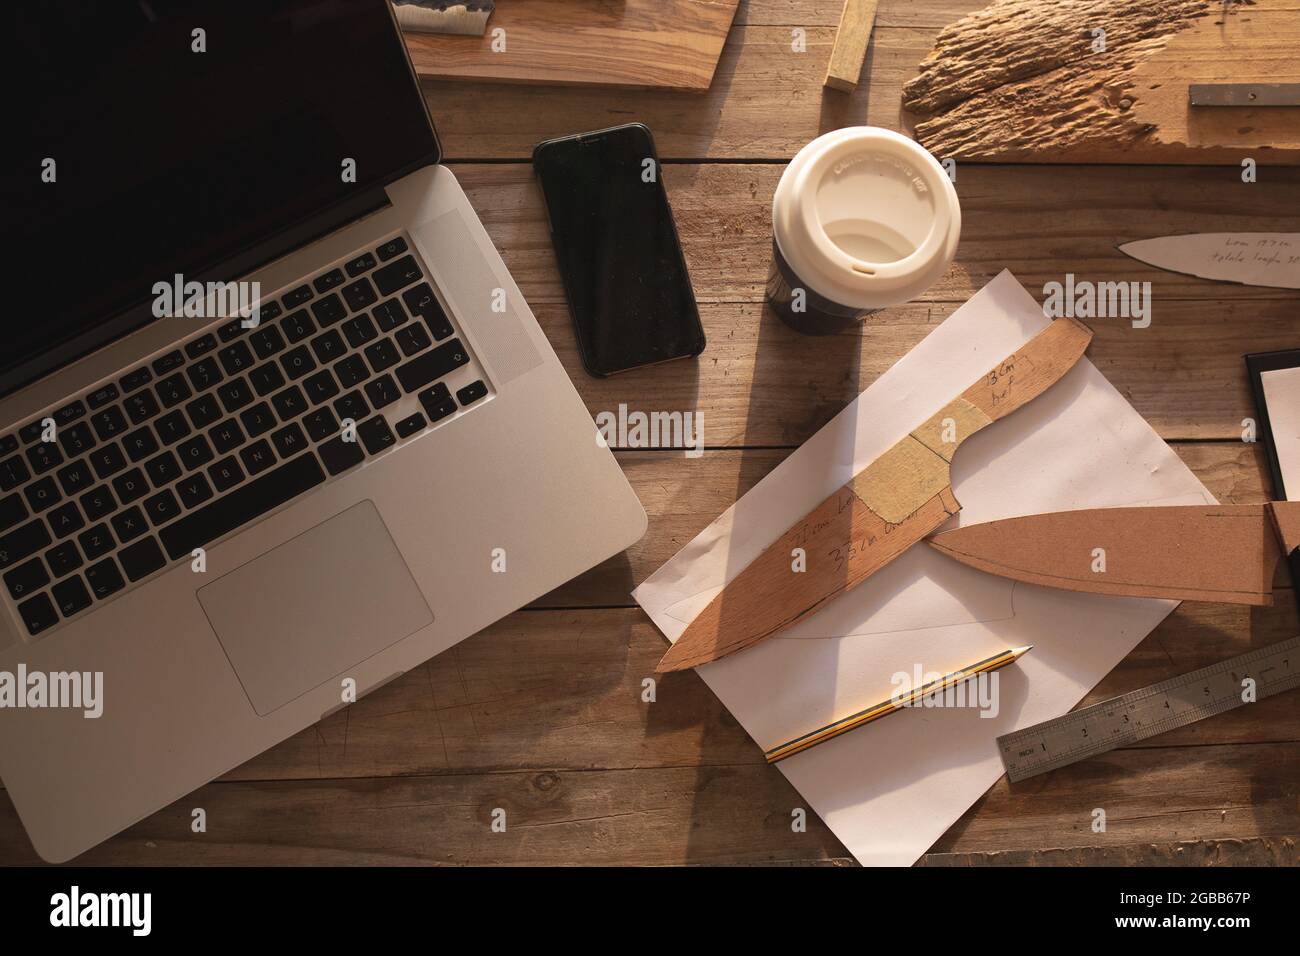 Laptop, smartphone, knife molds and other utensils lying on desk at knife maker workshop Stock Photo